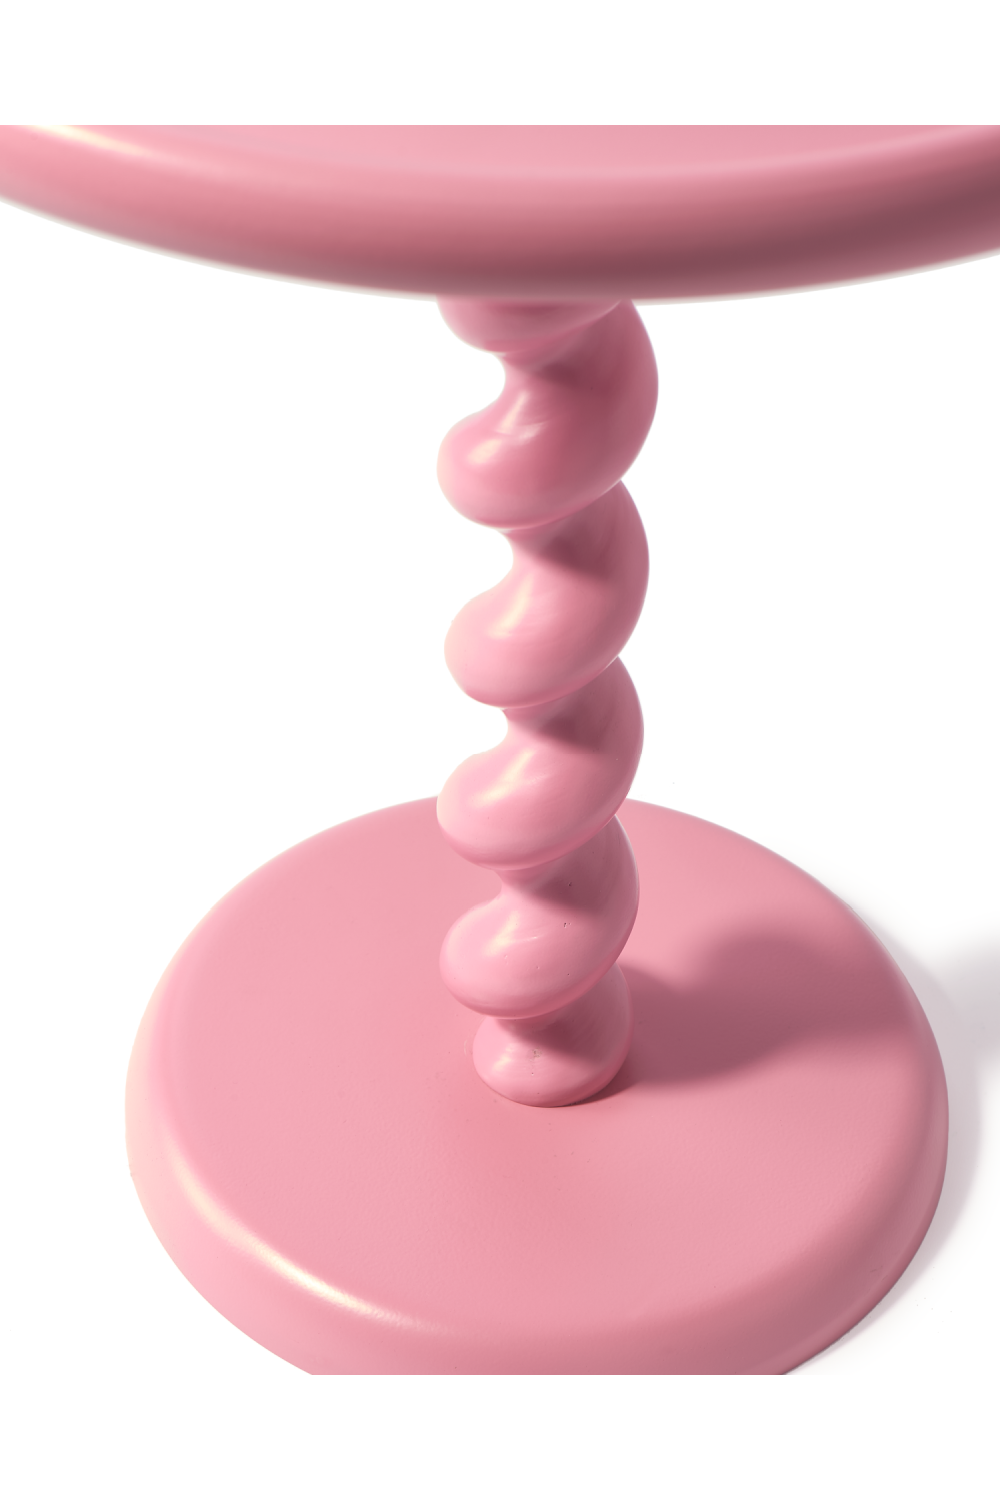 Modern Pedestal Side Table (2) | Pols Potten Twister | Oroa.com